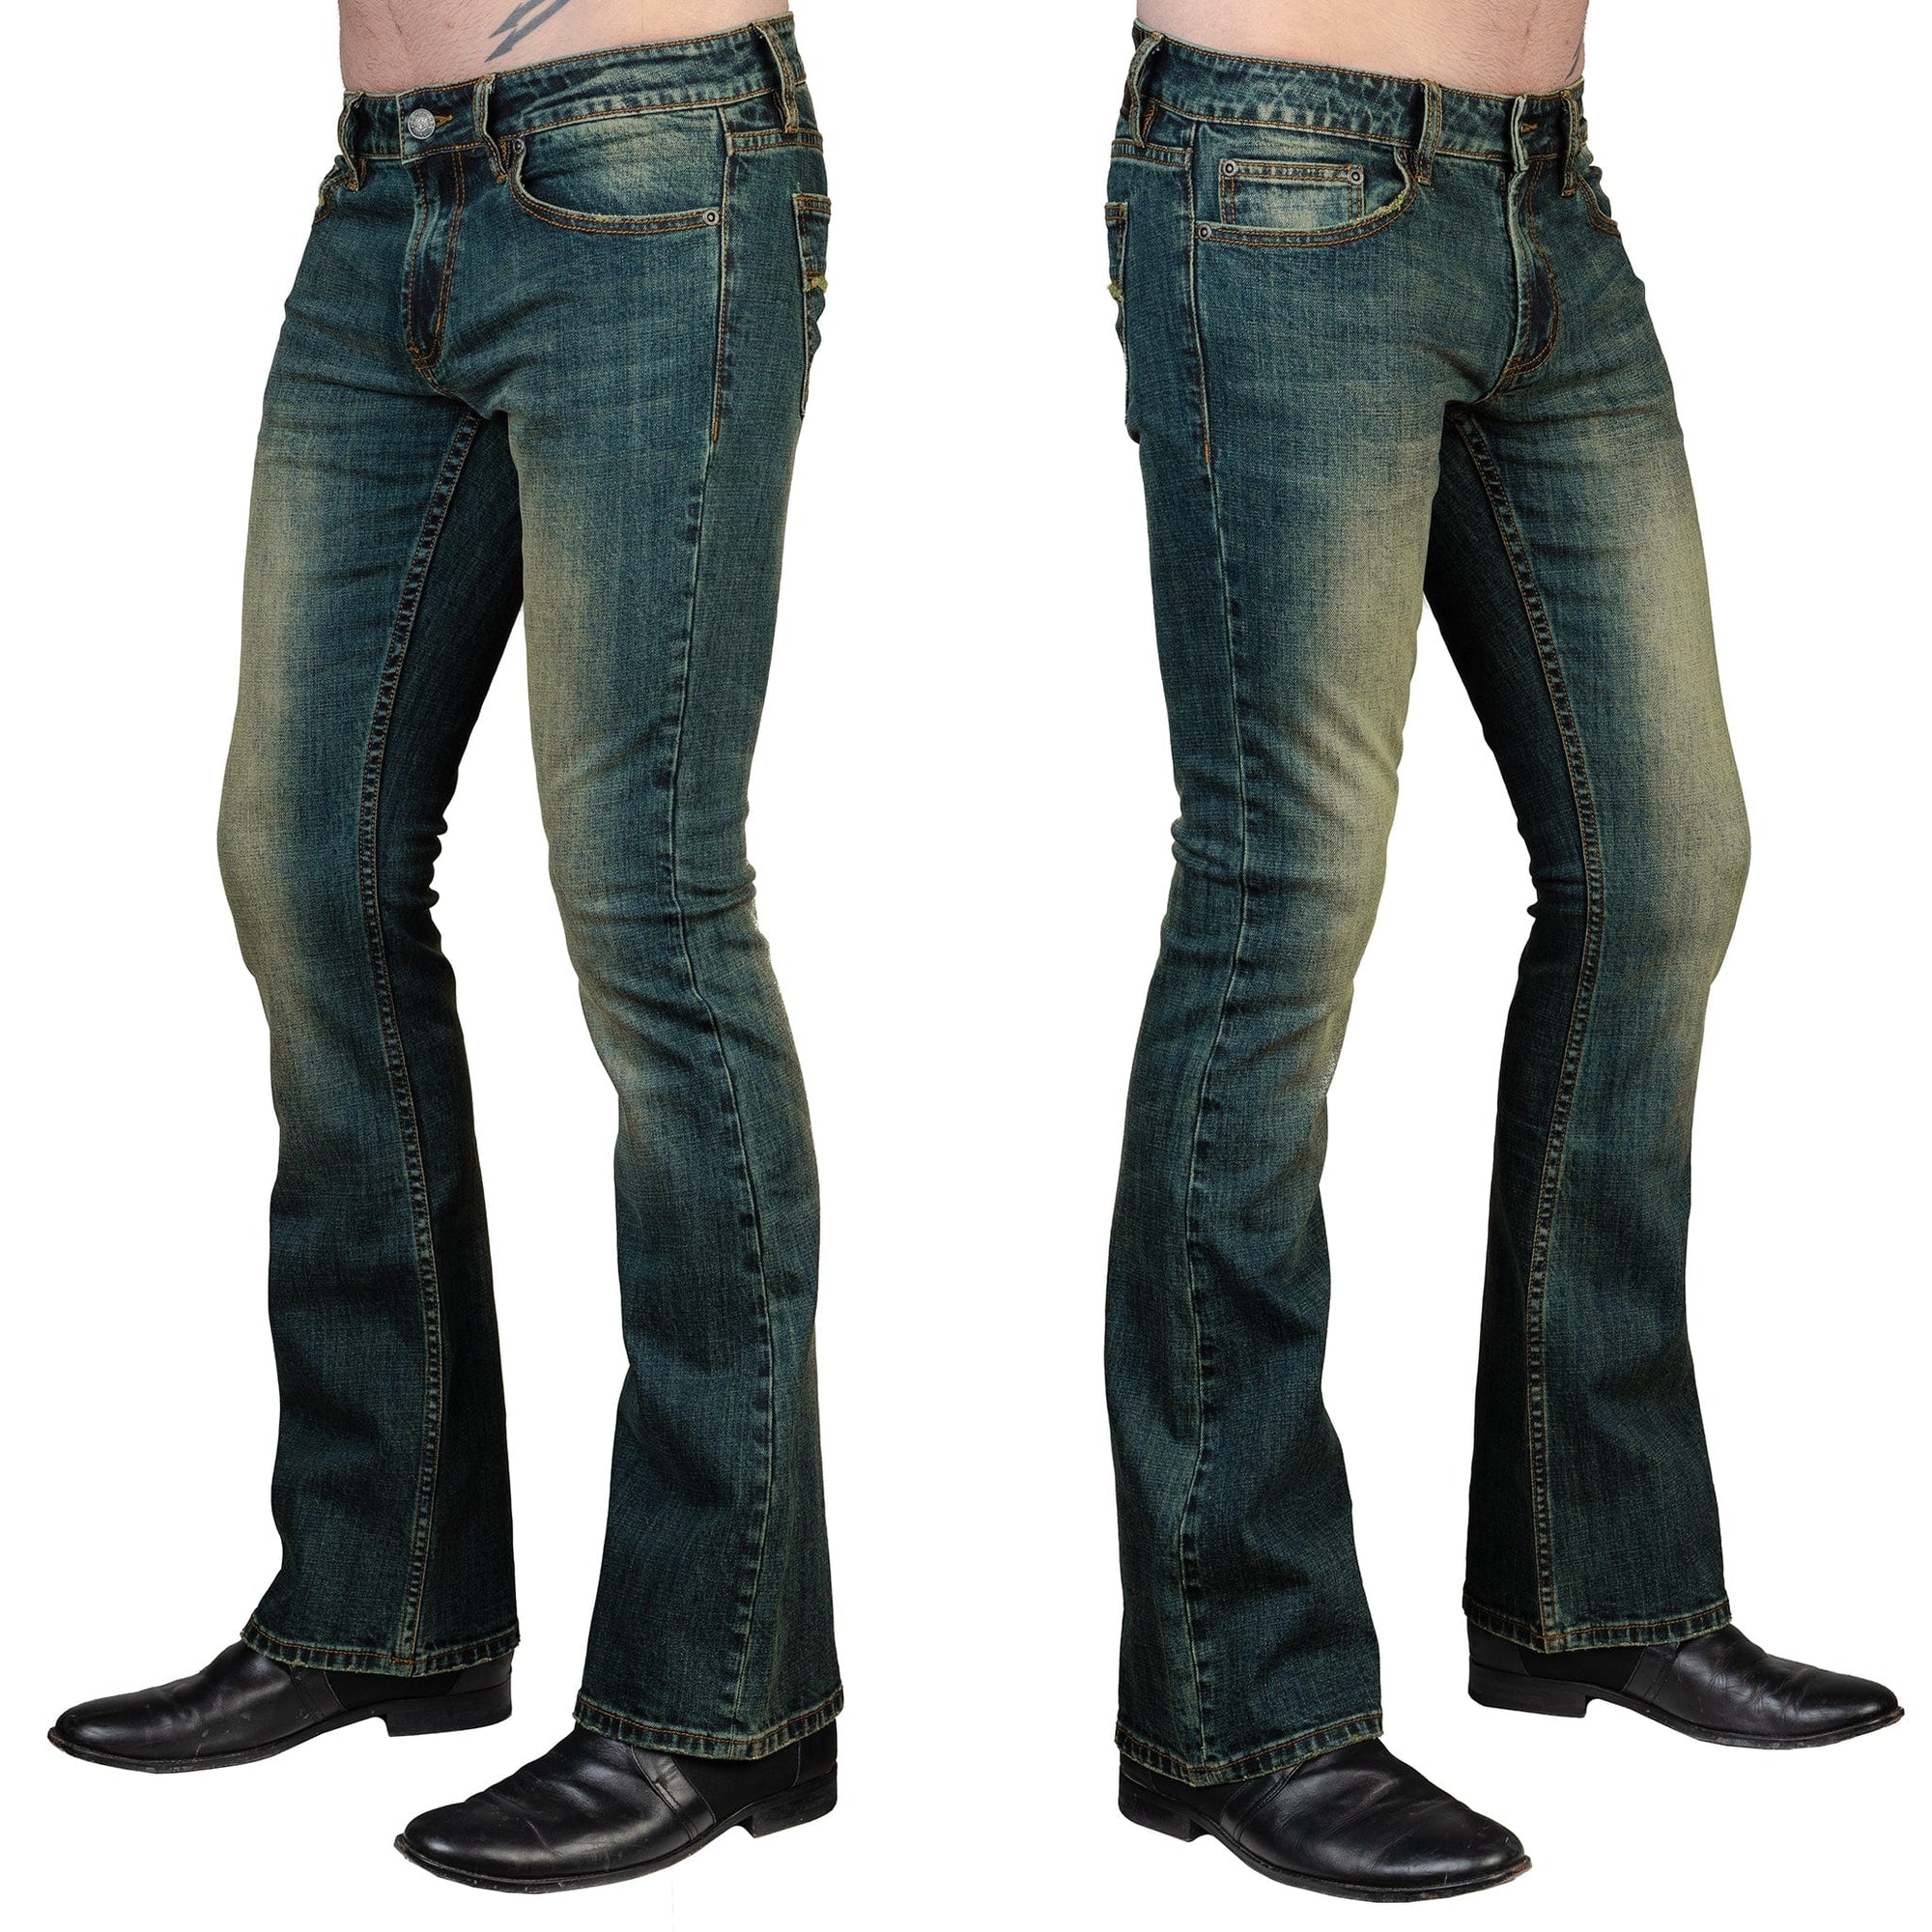 Wornstar Clothing Mens Jeans Hellraiser Denim Pants - Vintage Blue